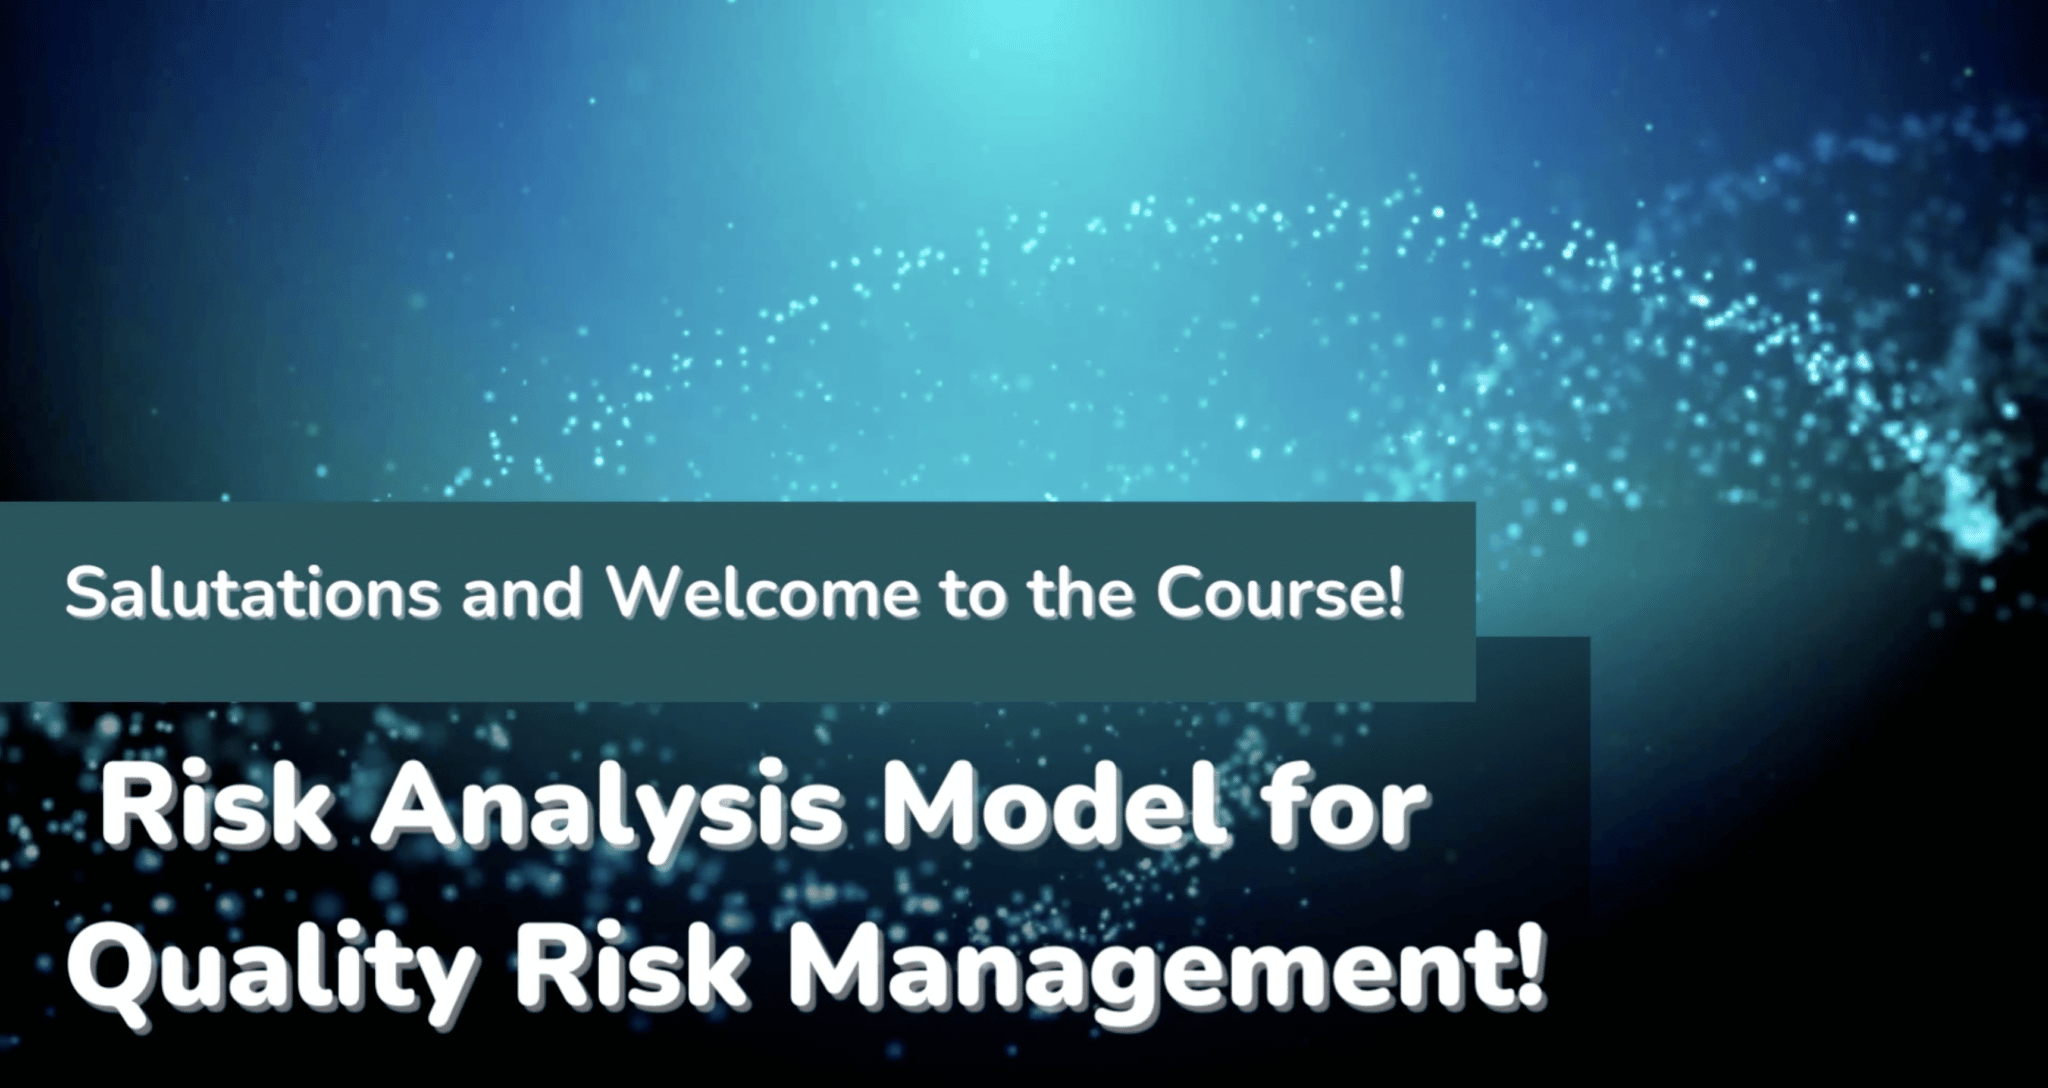 Risk Analysis Model for Management of Quality Risk